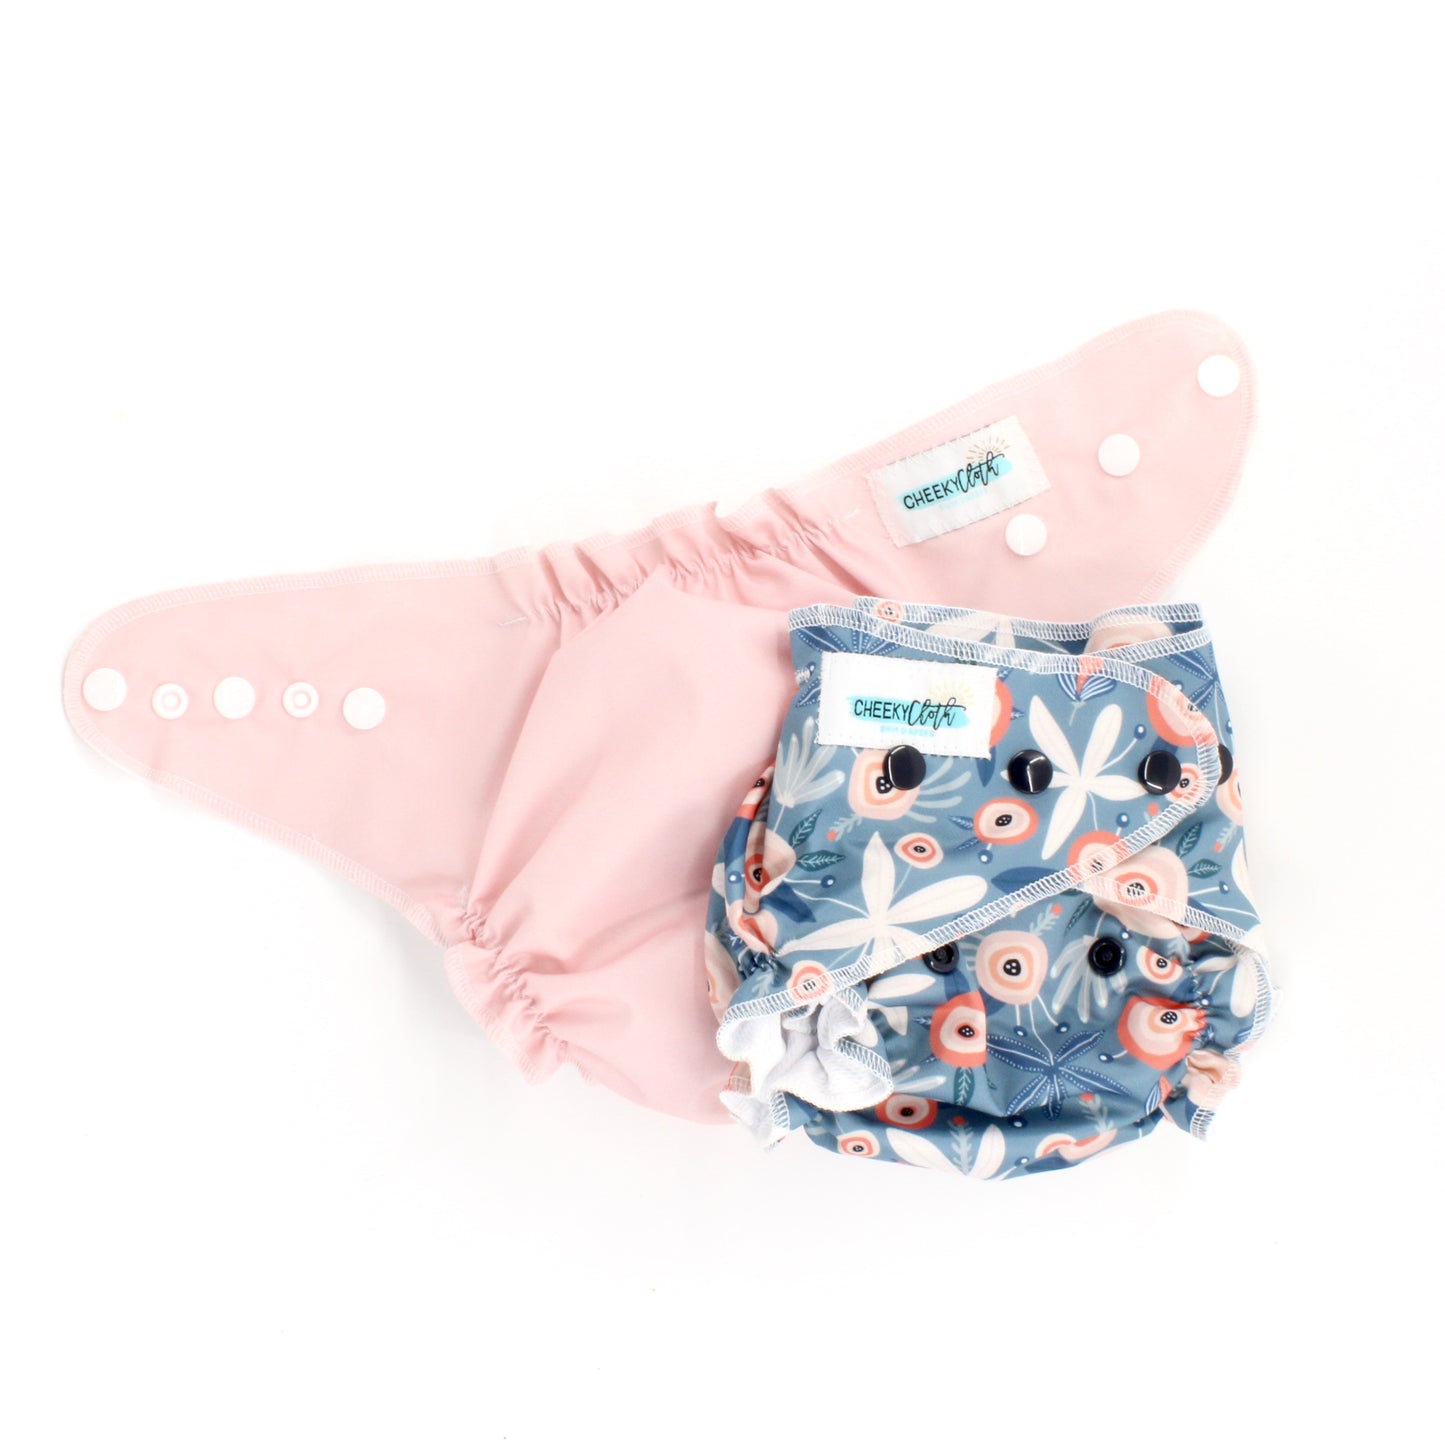 Cheeky Cloth One Size Reusable Swim Diaper "Boho Floral"